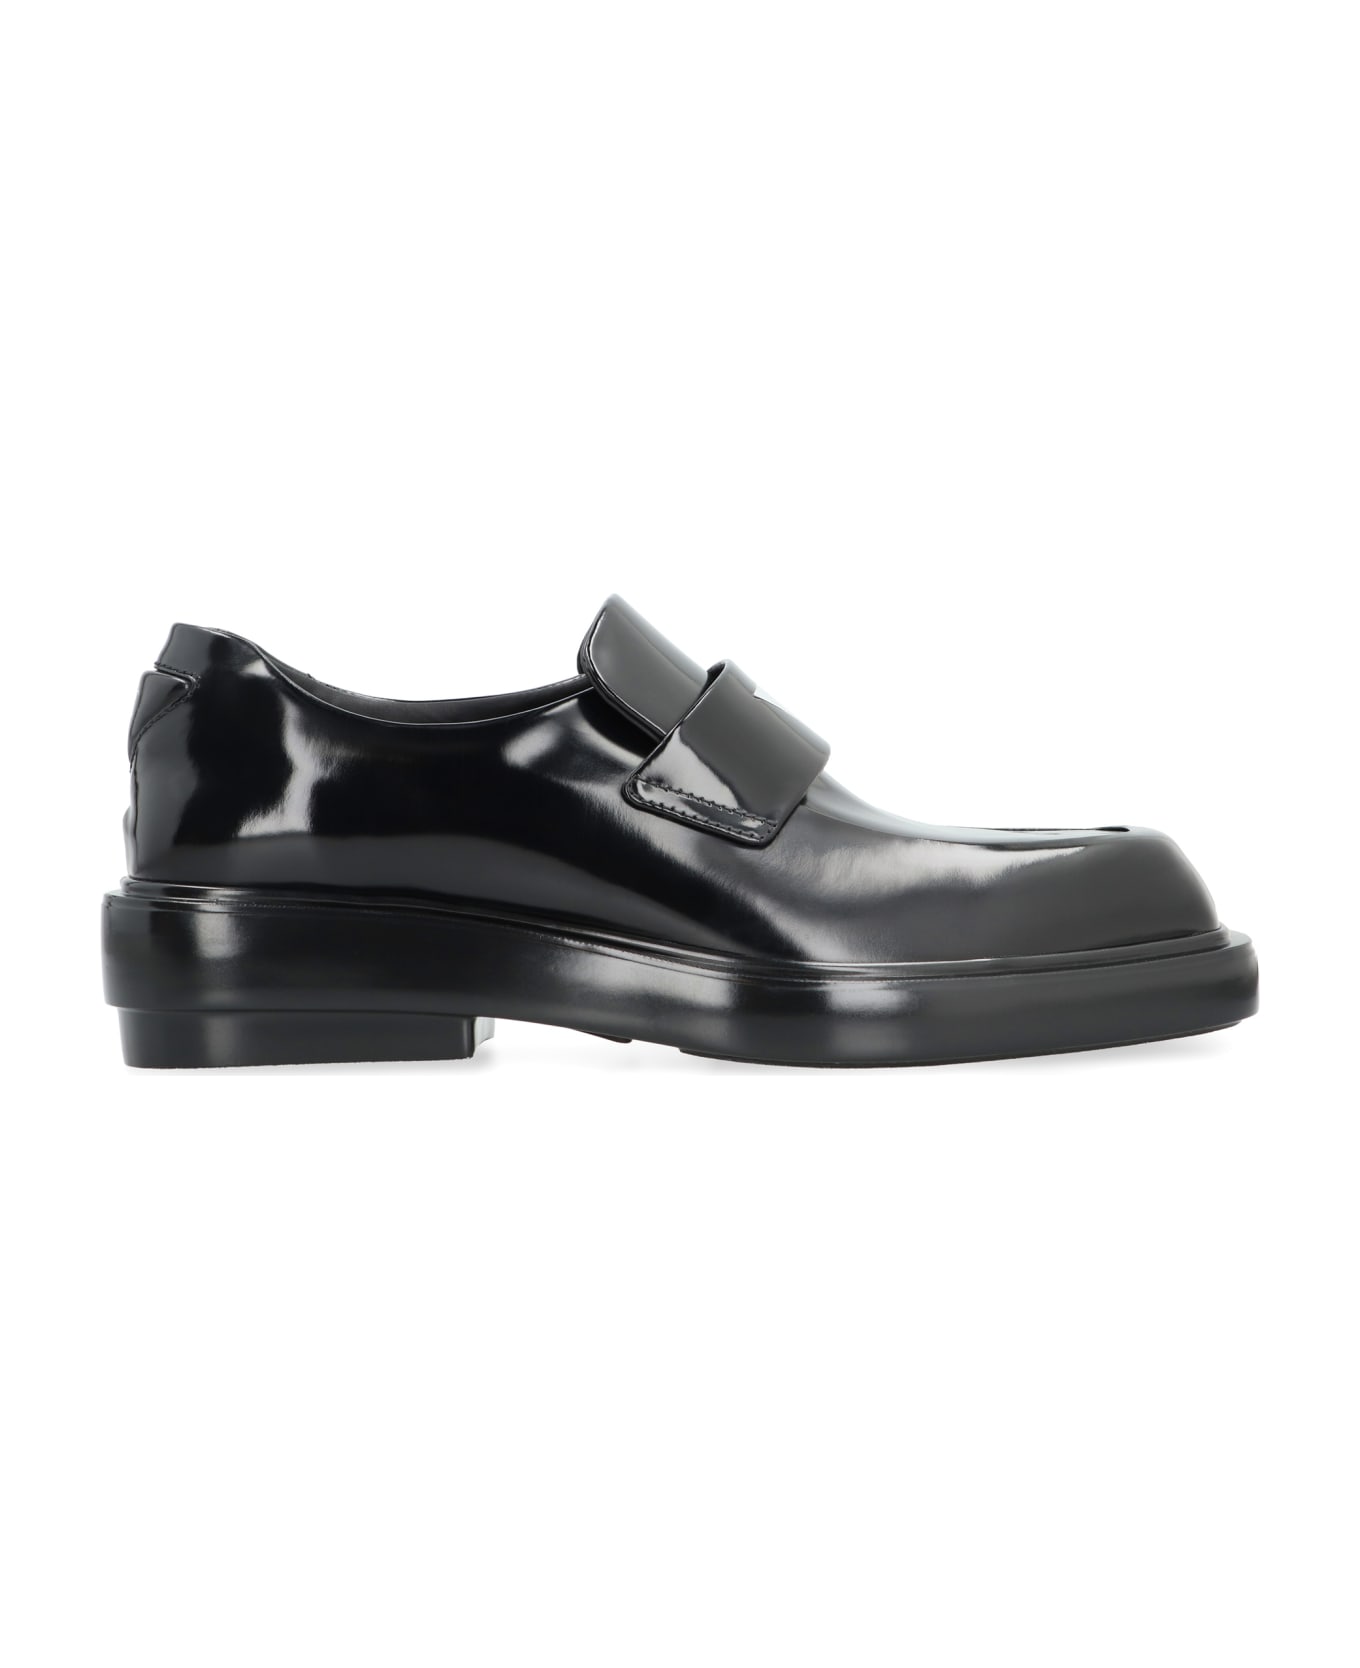 Prada Leather Loafers - black